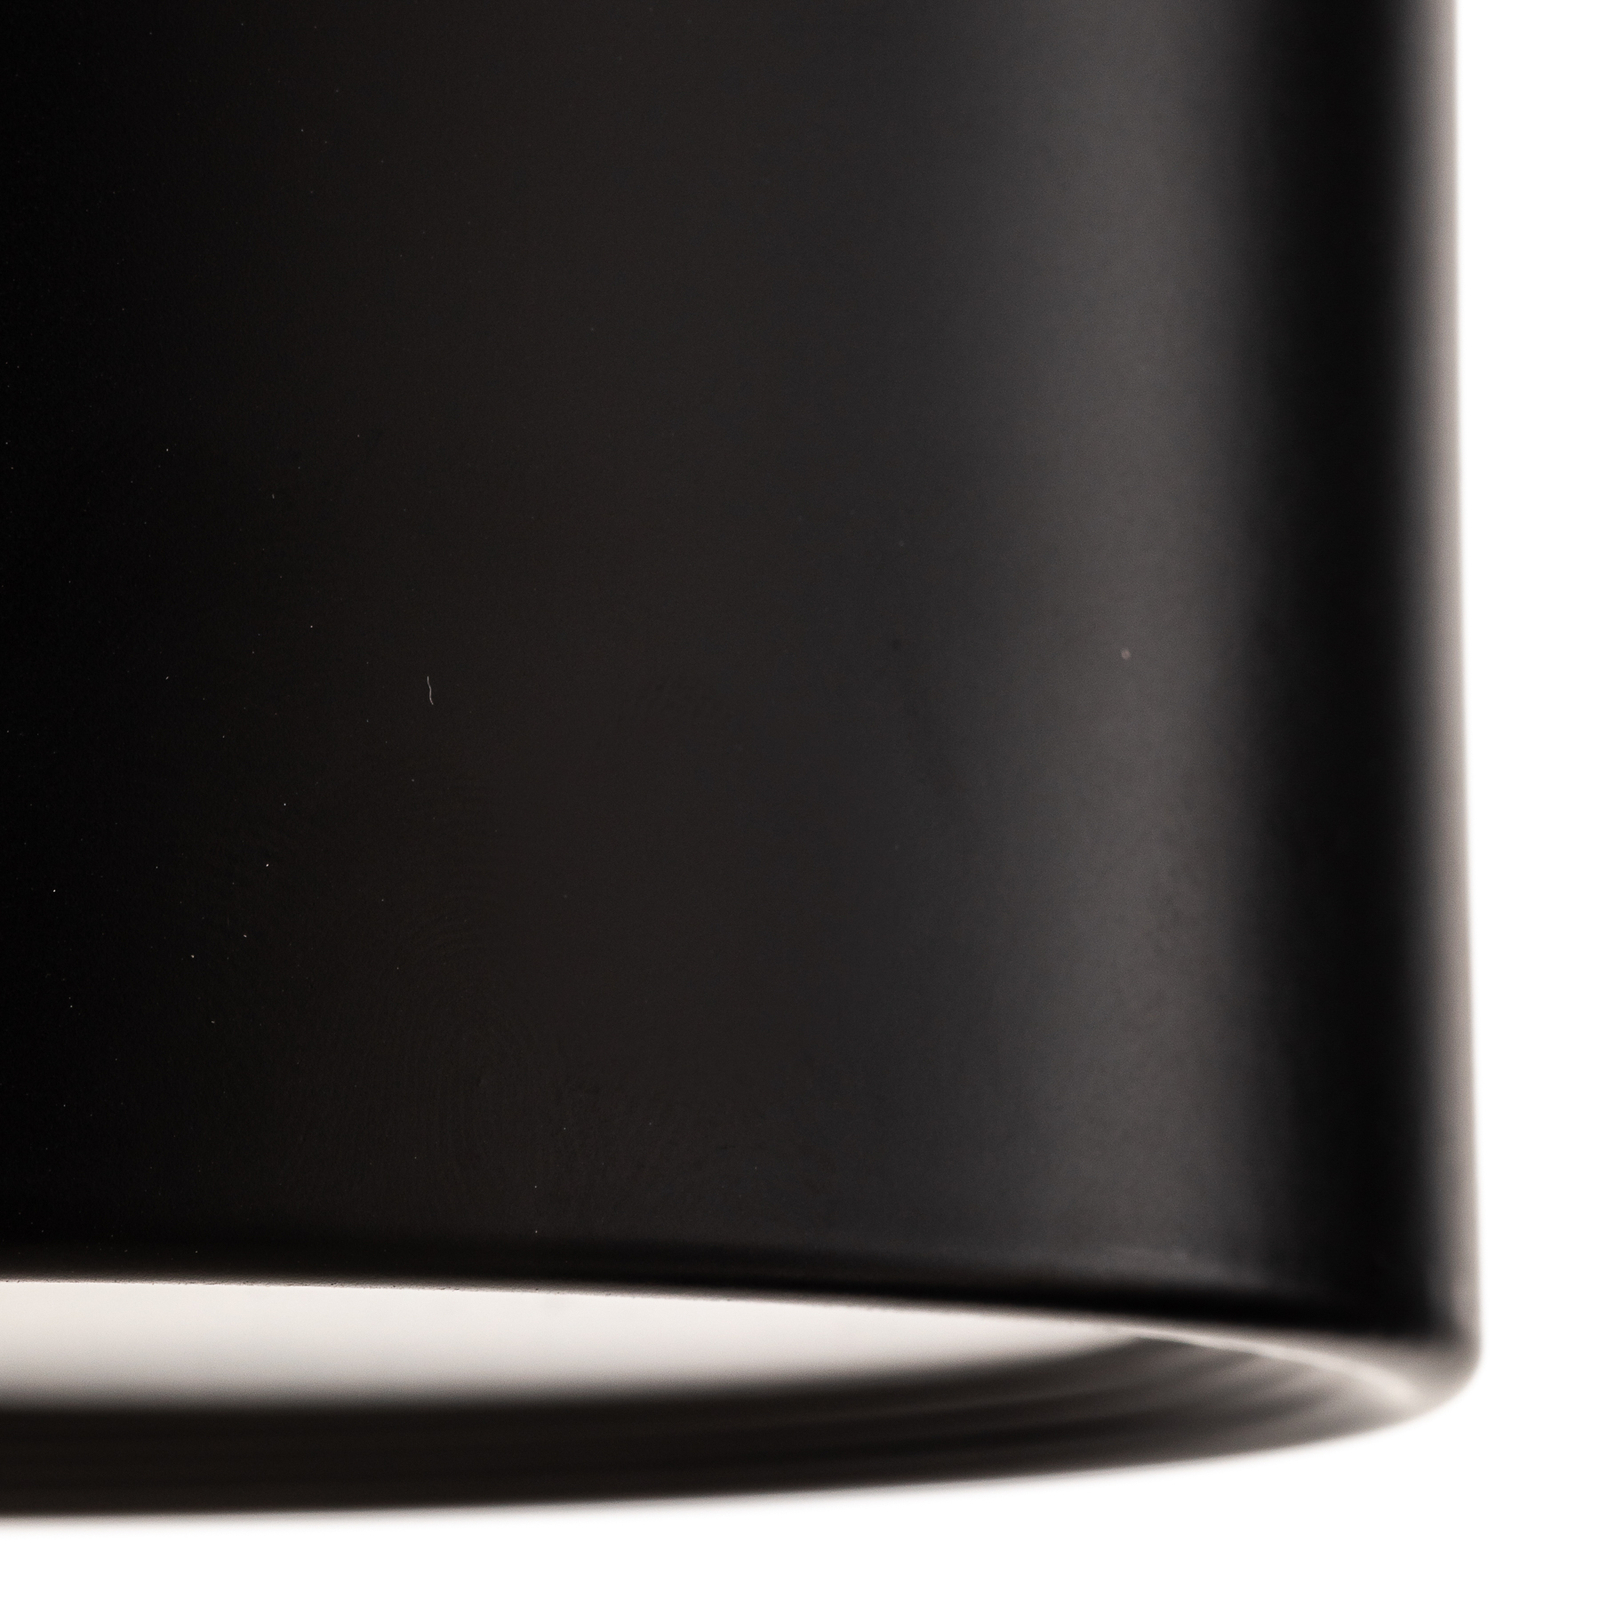 LED-Downlight Ita in Schwarz mit Diffusor, Ø 10 cm